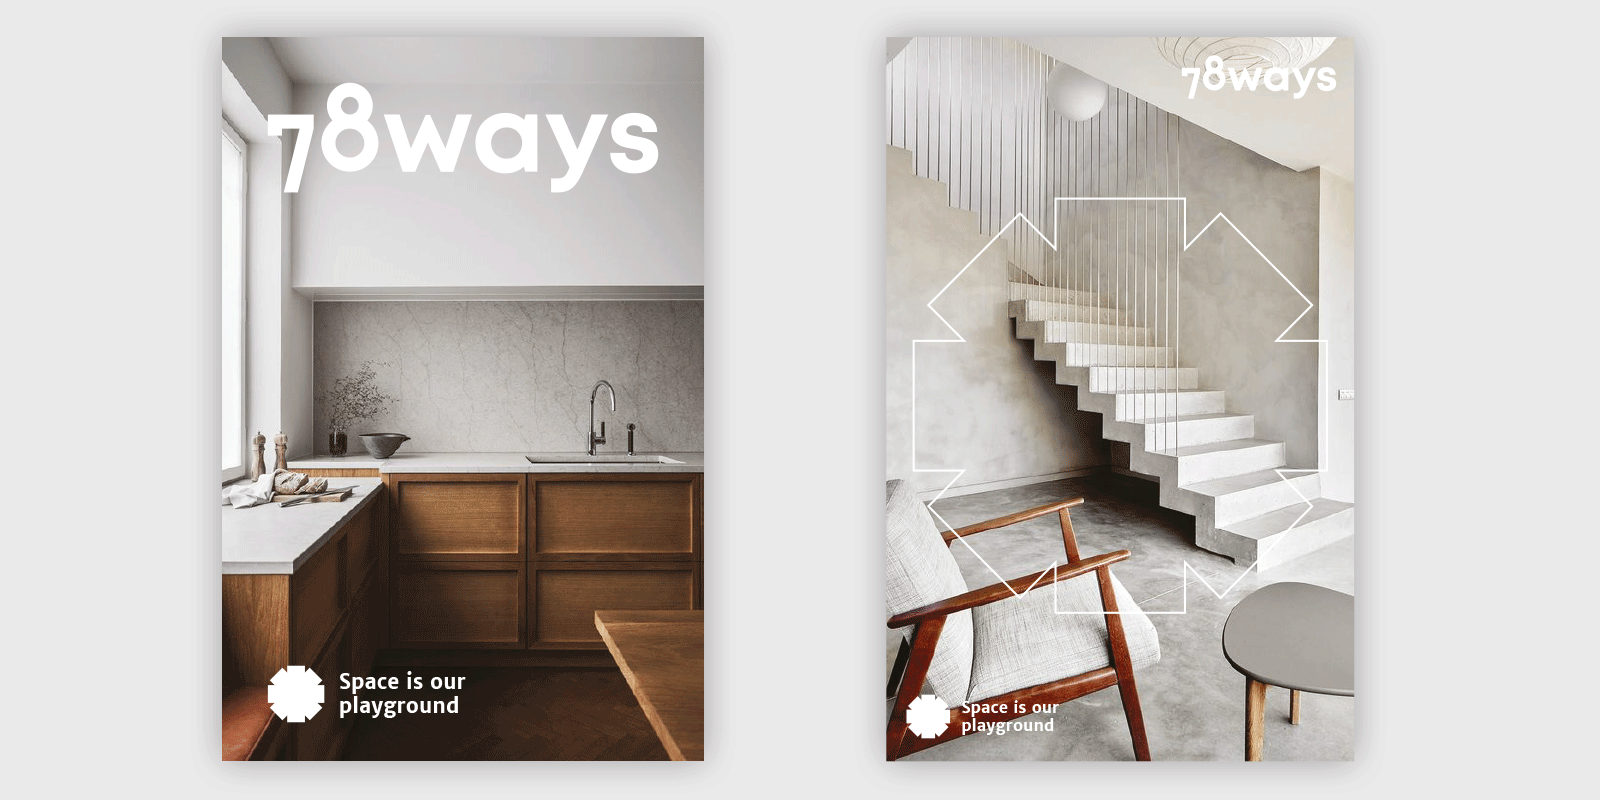 78ways interior architects amsterdam branding